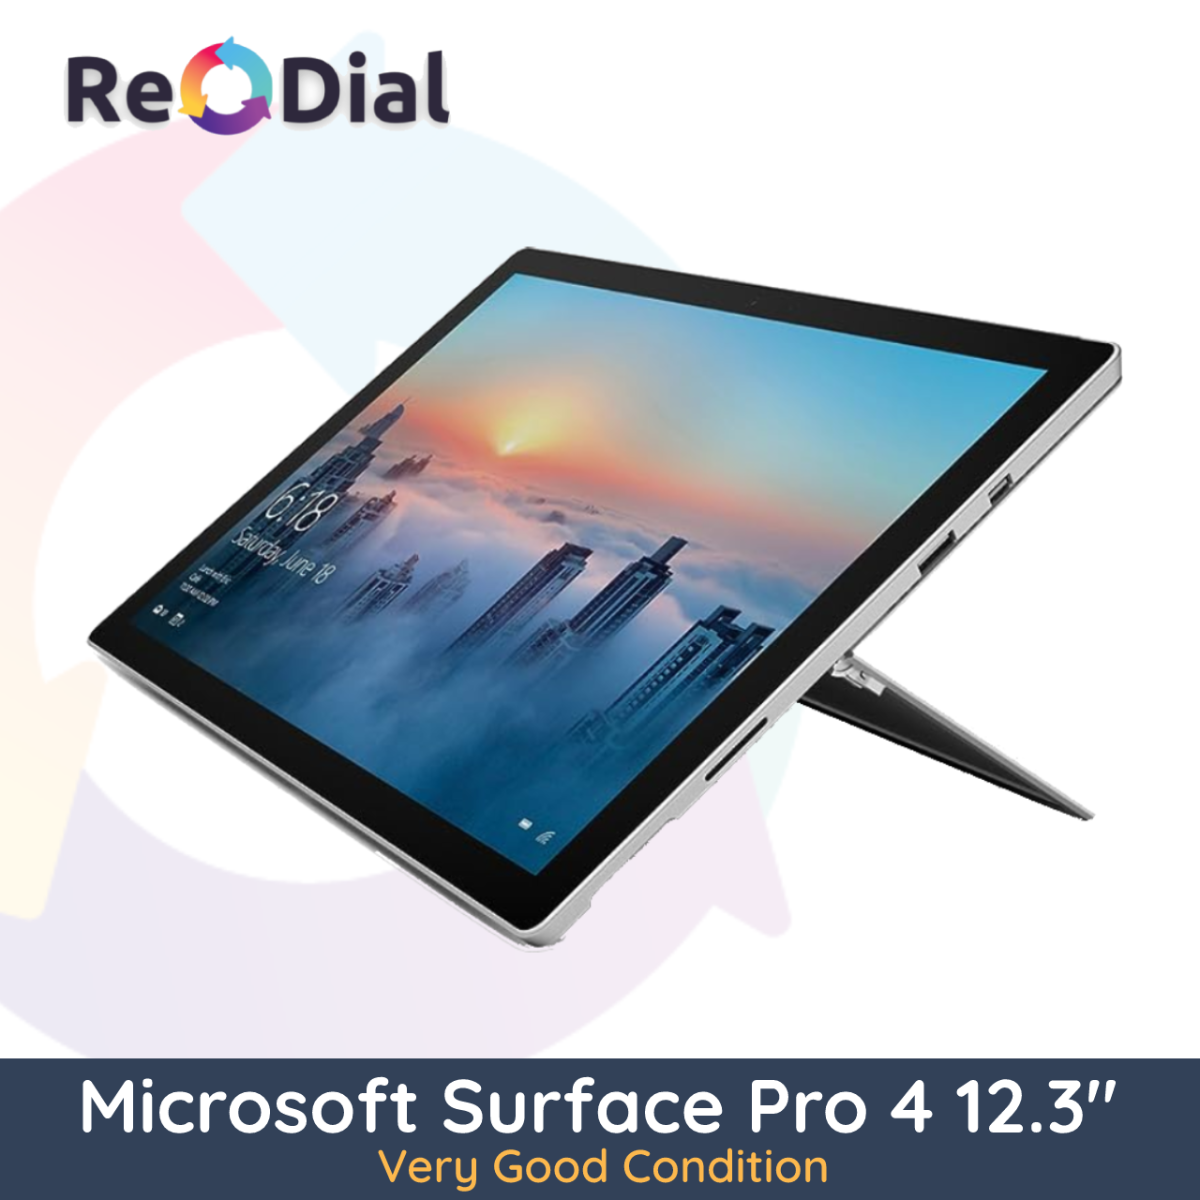 Microsoft Surface Pro 4 12.3" i5-6300U 256GB 8GB RAM - Very Good Condition